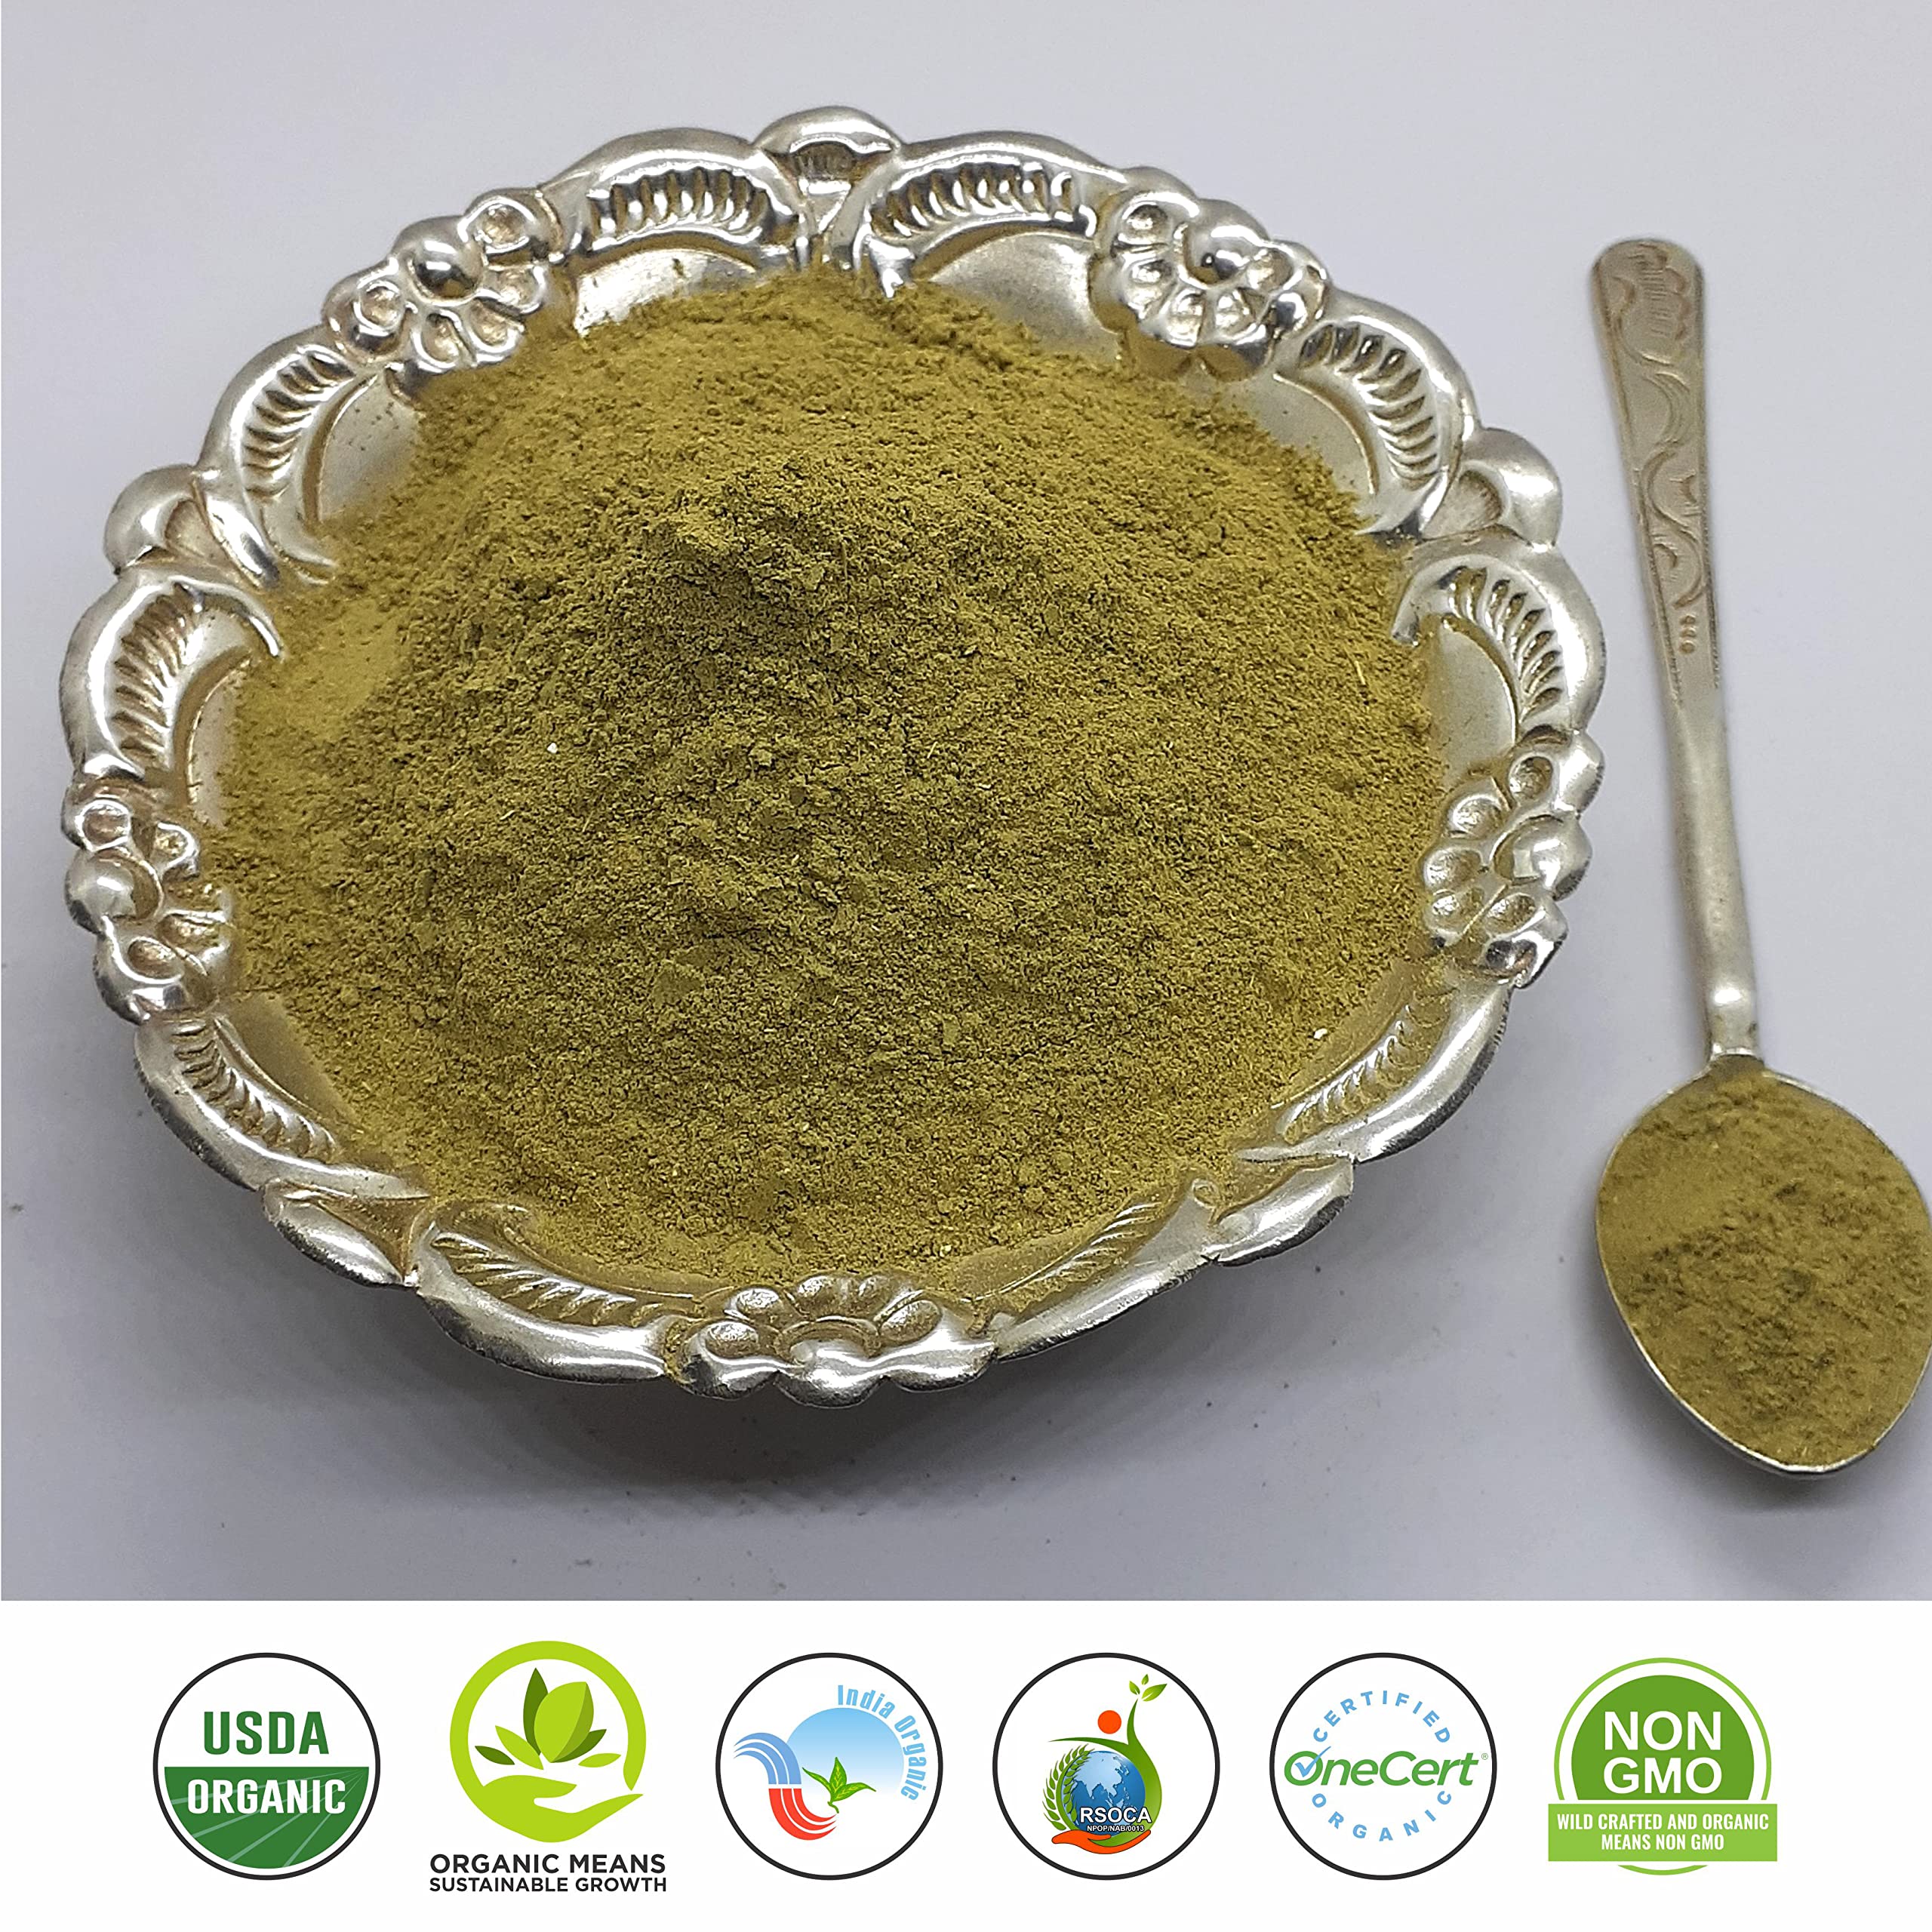 HerbsForever Neem Powder – Azadirachta Indica – Ayurvedic Herb for Healthy Skin – Non GMO, Organic, Vegan – 454 GMS